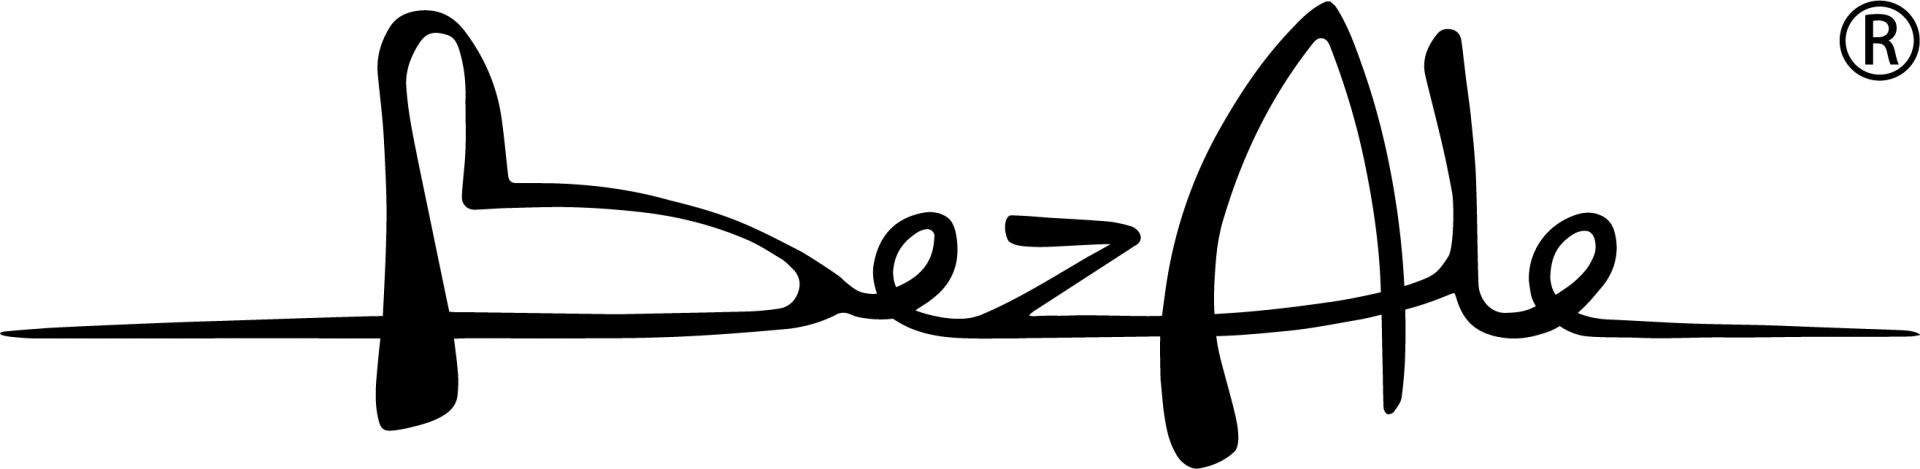 logo BezAle